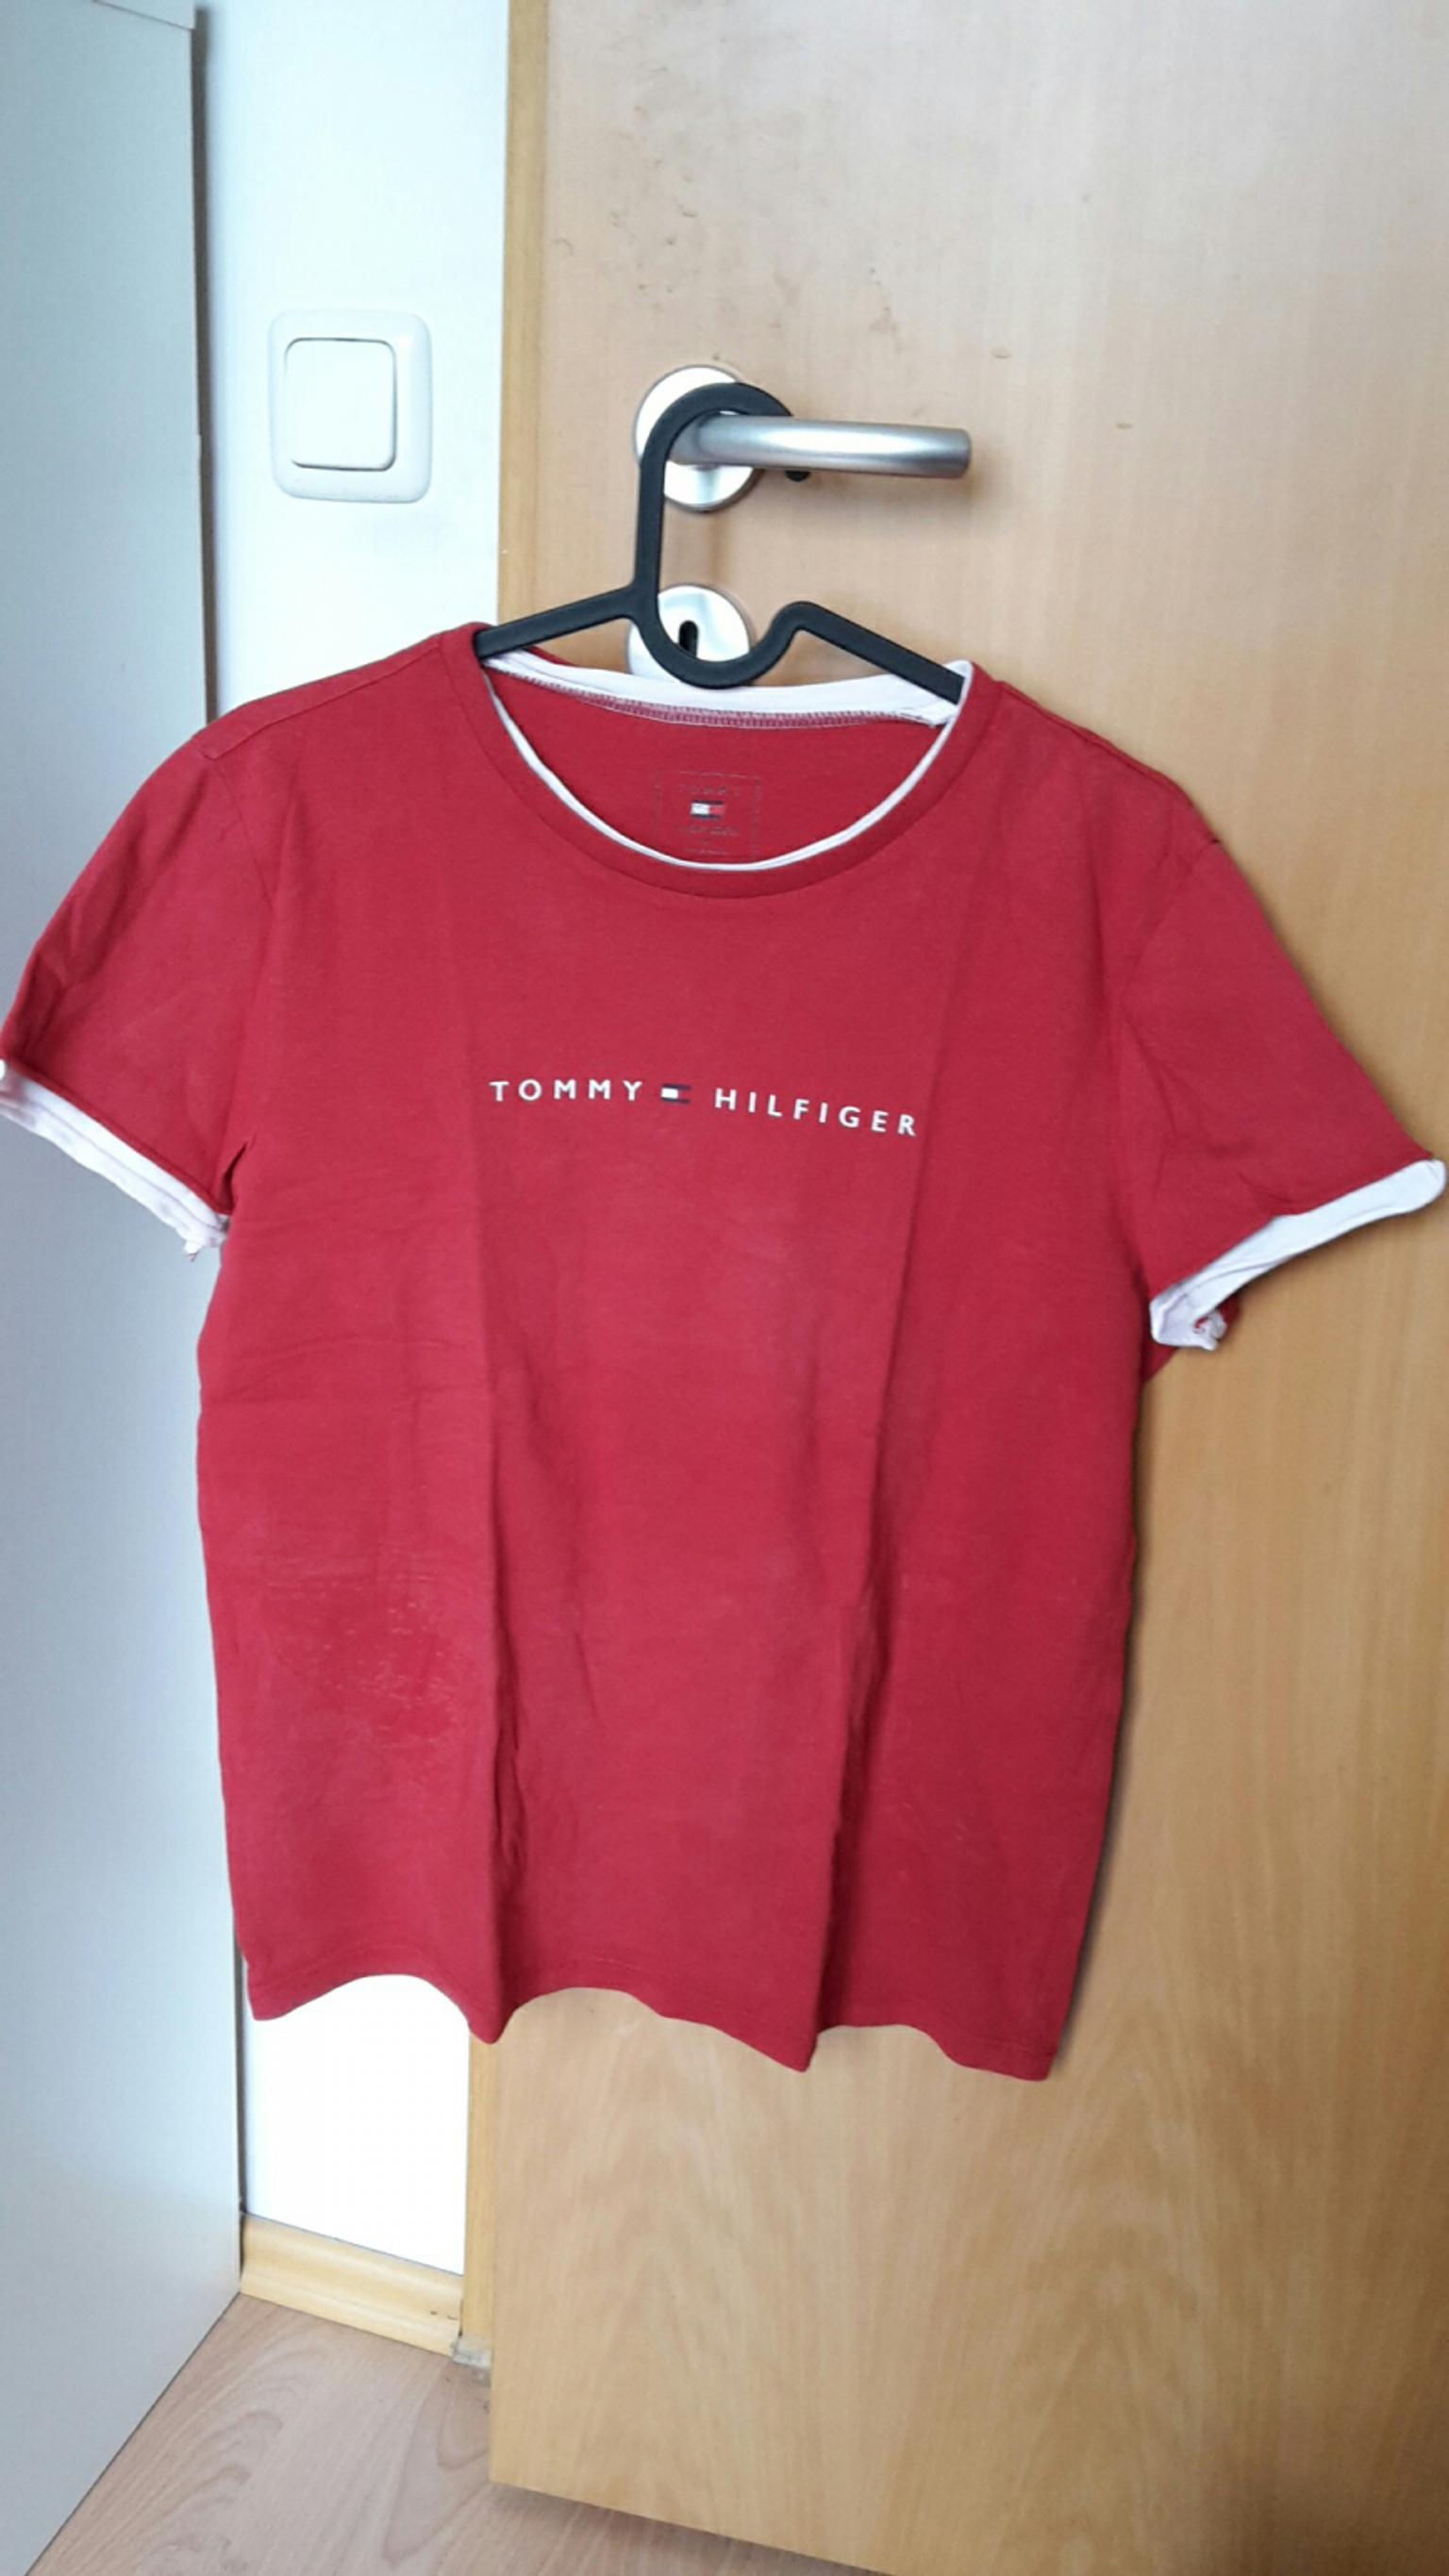 tommy hilfiger rn 77806 ca 20781 shirt